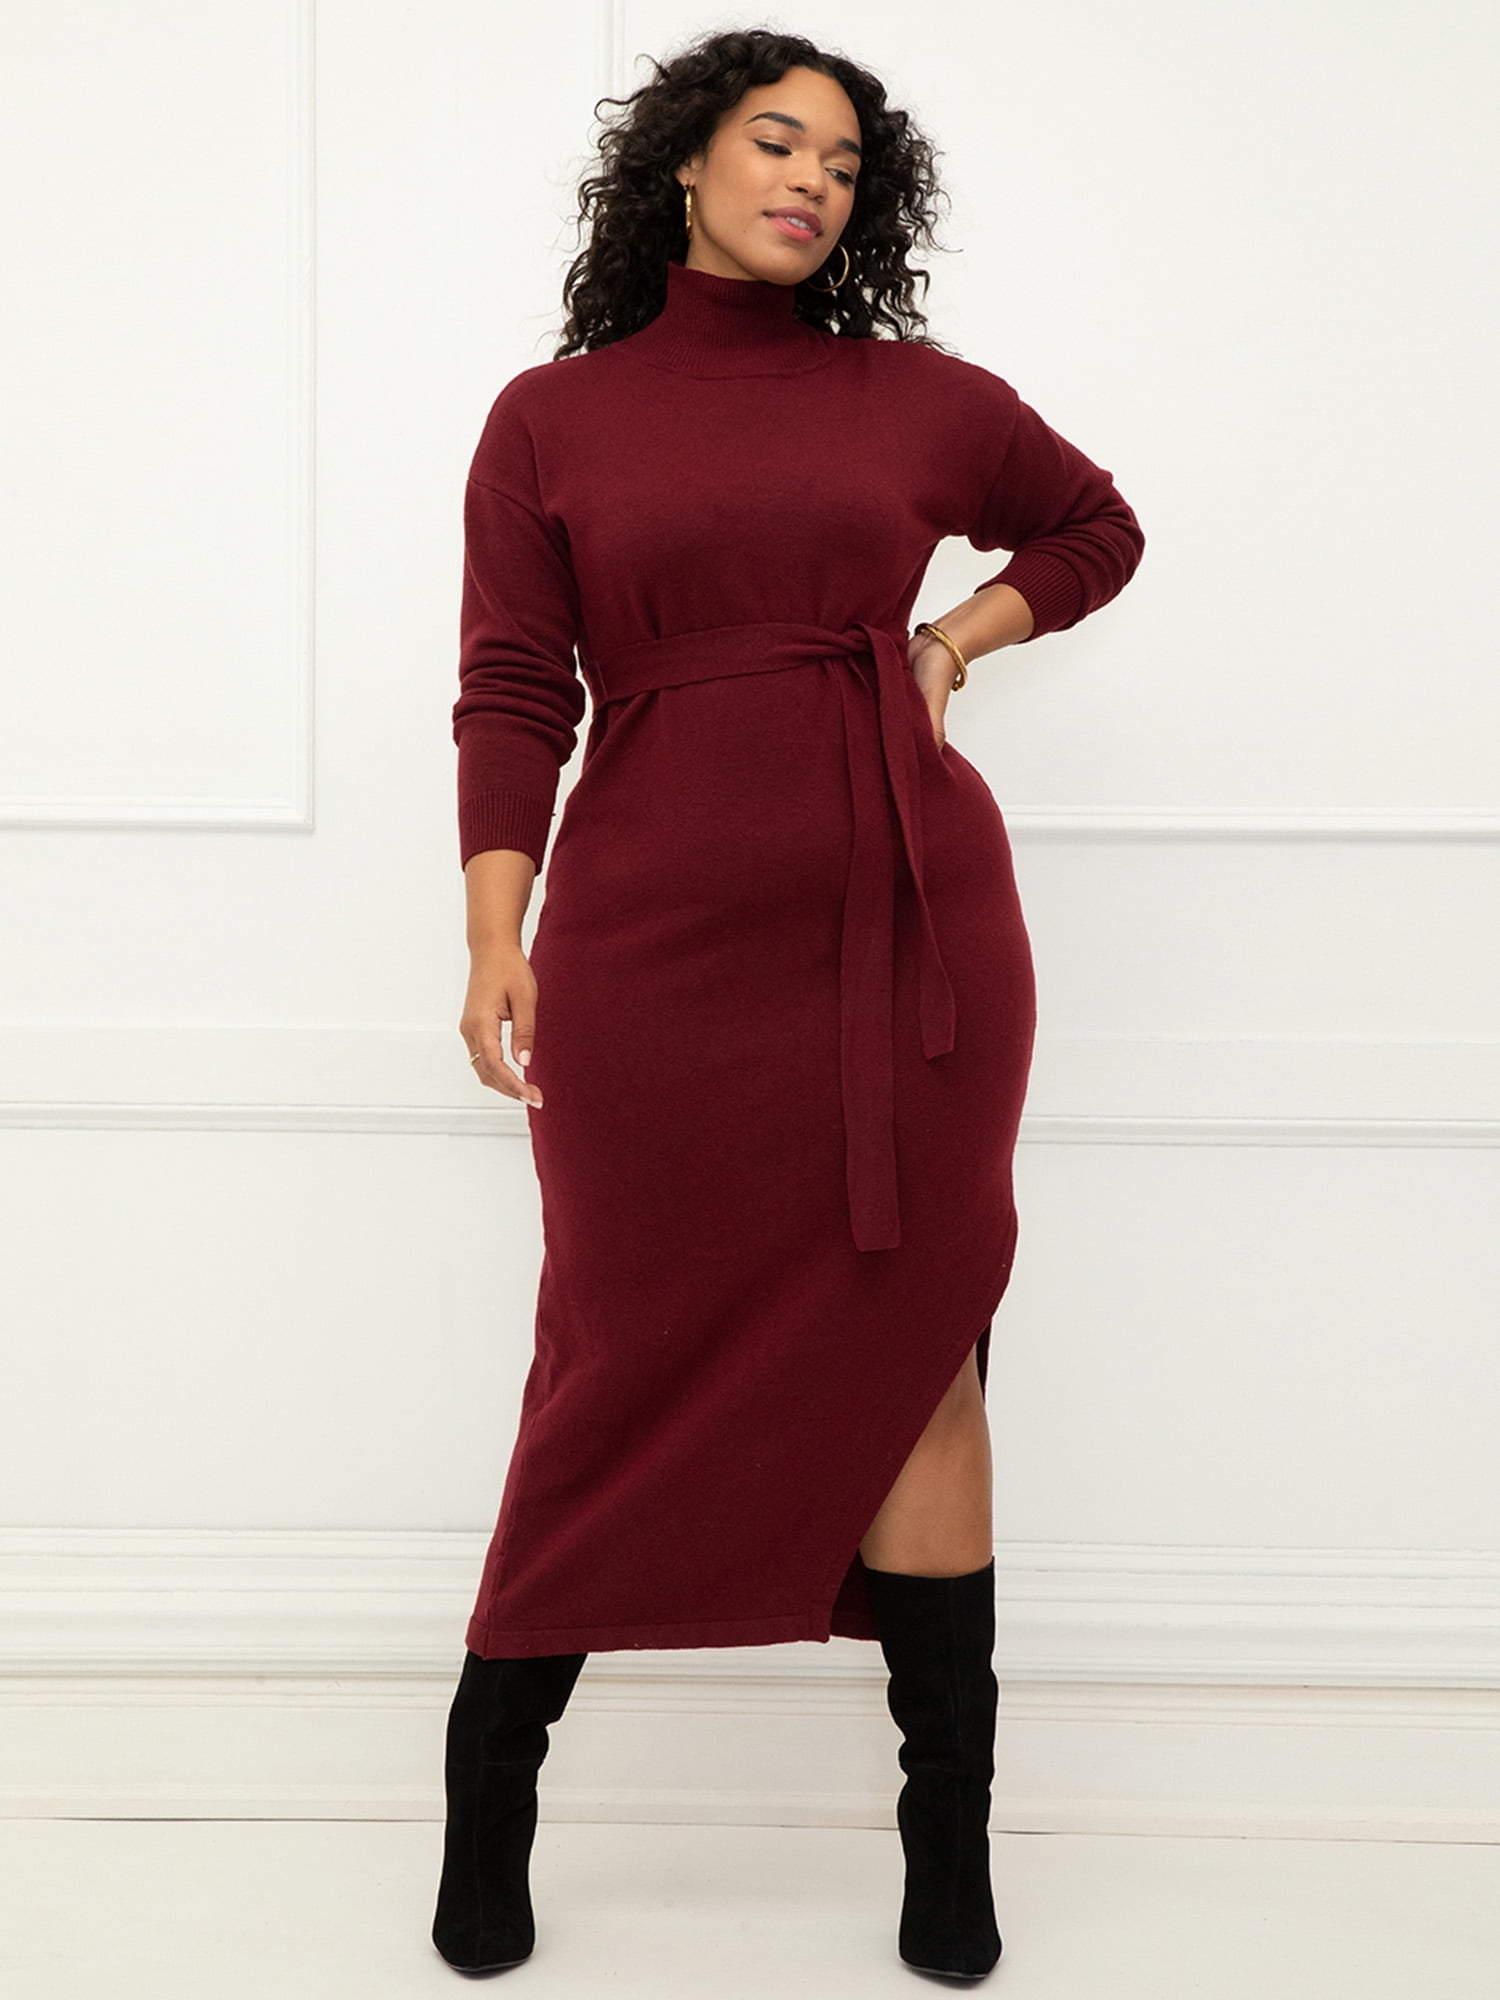 a model wearing the dress in burgundy